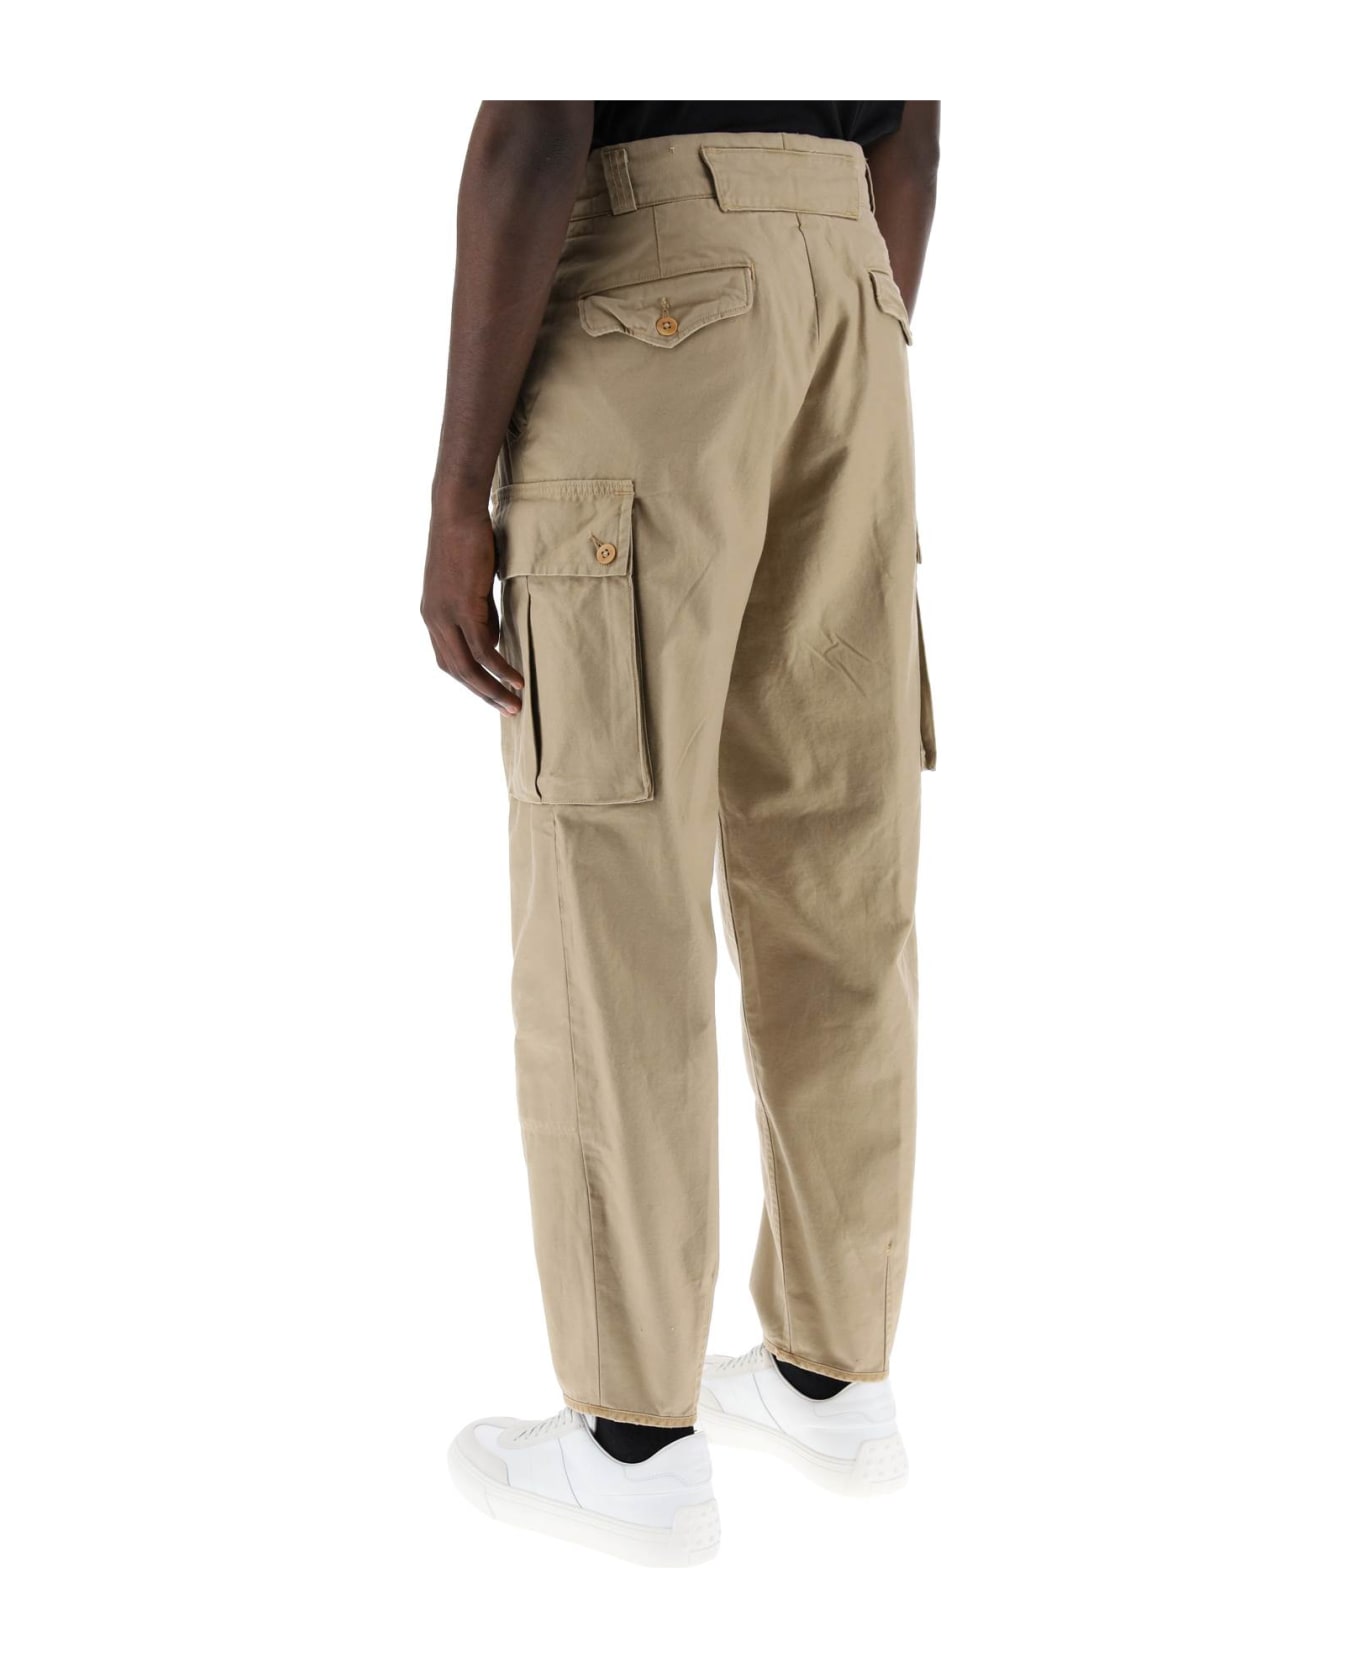 Polo Ralph Lauren Cotton Cargo Pants - DESERT KHAKI (Beige)